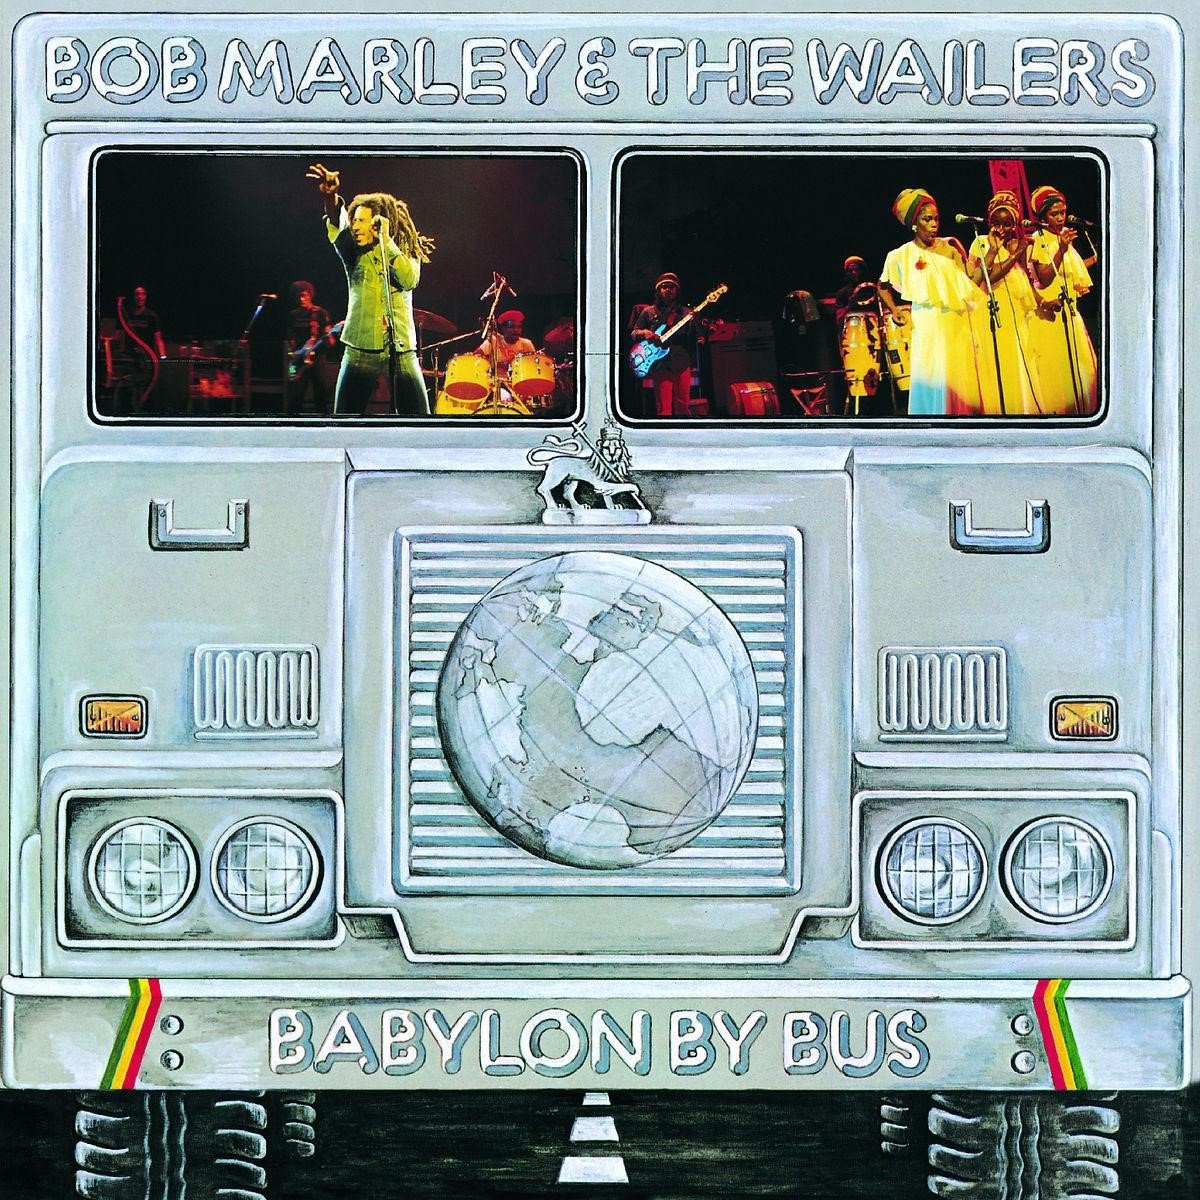 Bob Marley & The Wailers - Babylon By Bus (CD) (Remastered) - Bob Marley & The Wailers